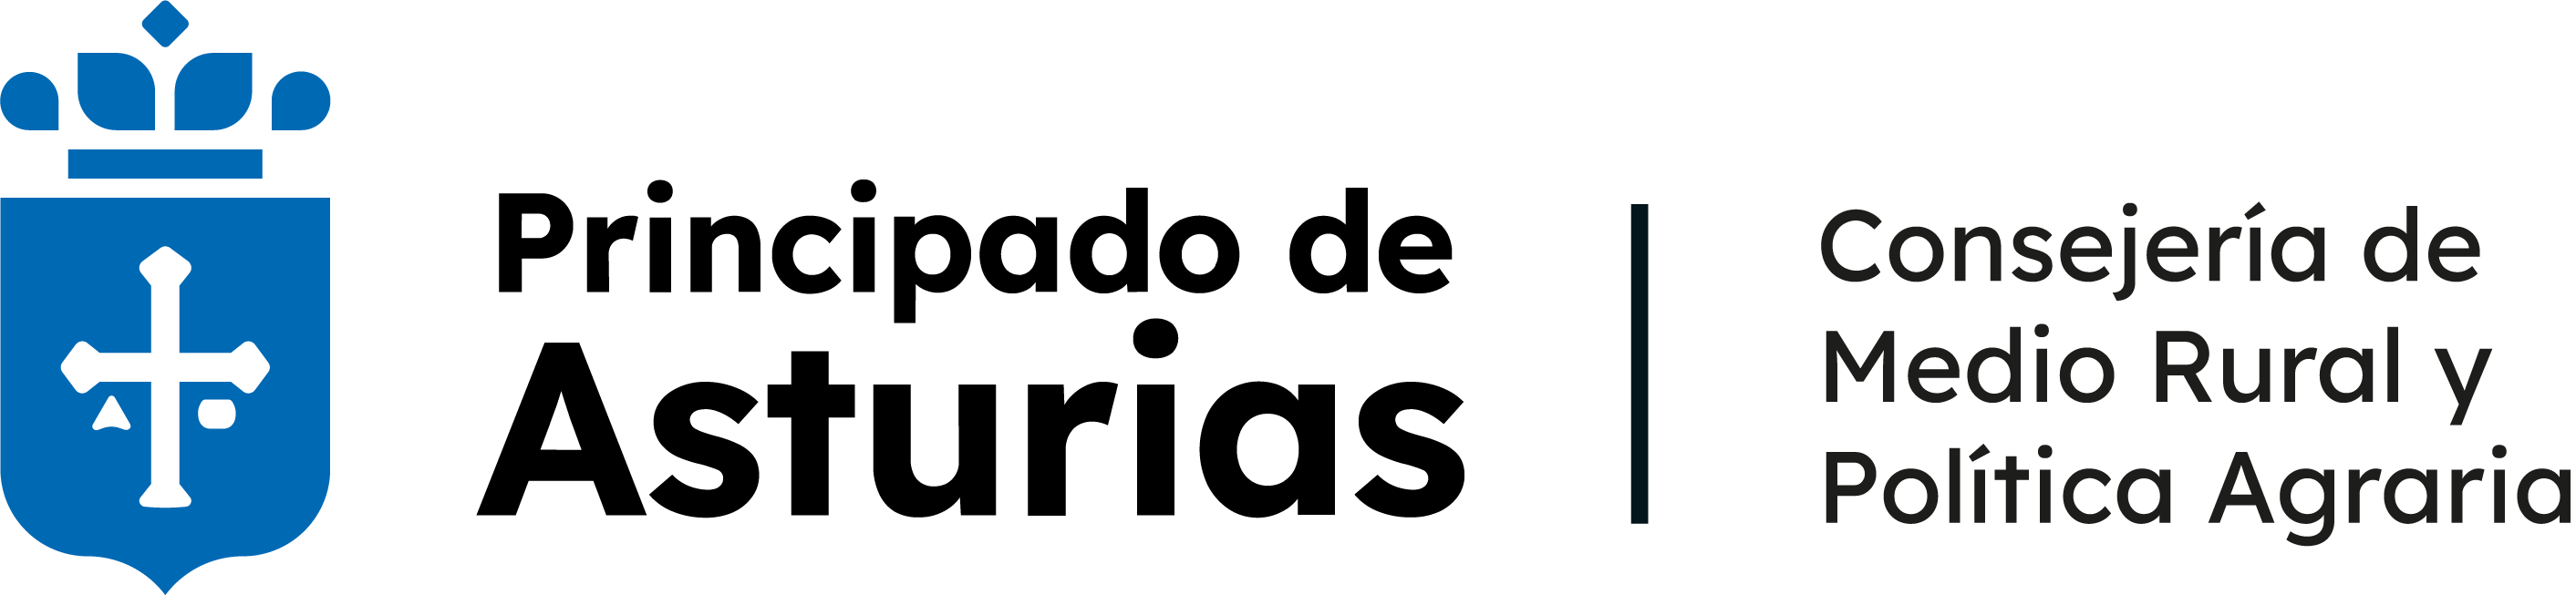 Logo consejeria